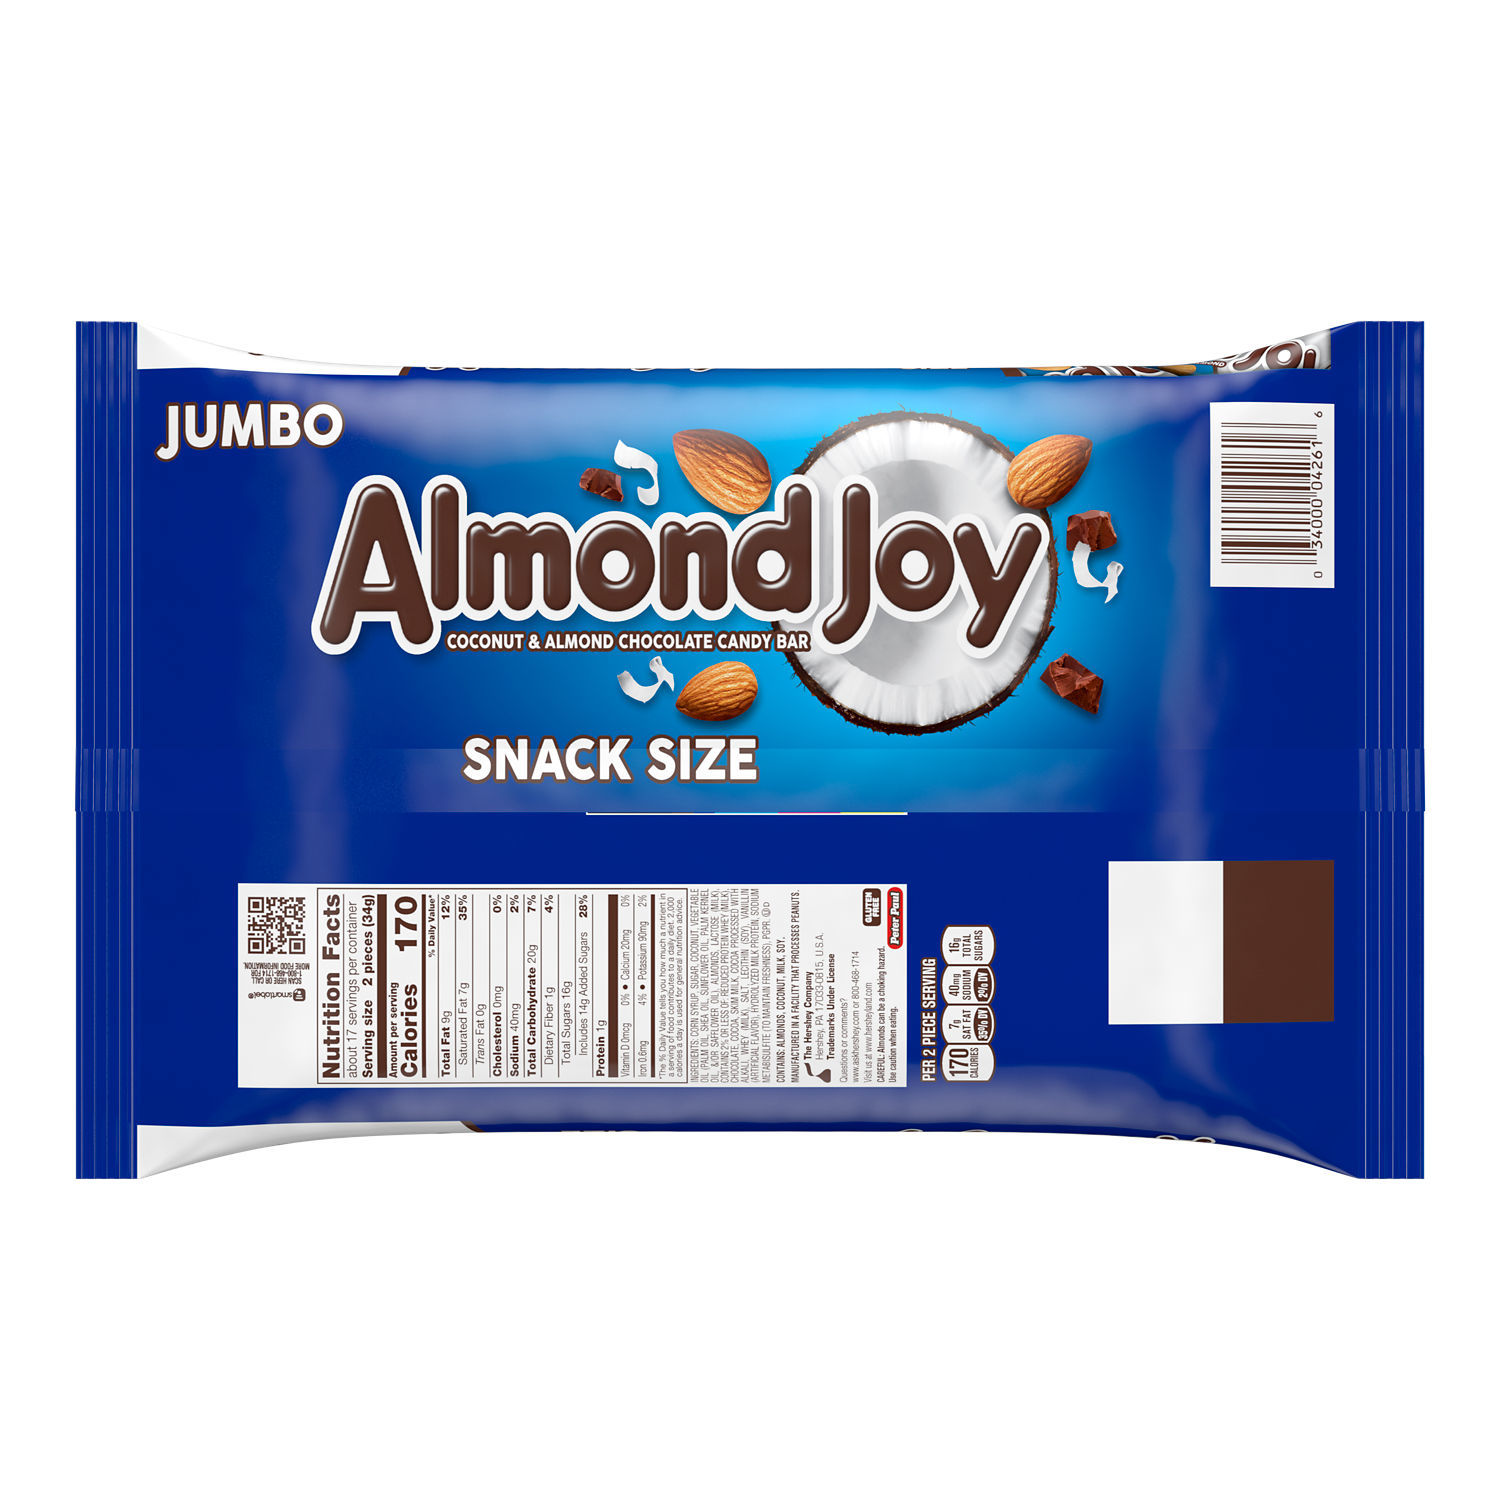 Almond Joy Coconut and Almond Chocolate Snack Size Candy, Jumbo Bag 20.1 oz - image 2 of 7